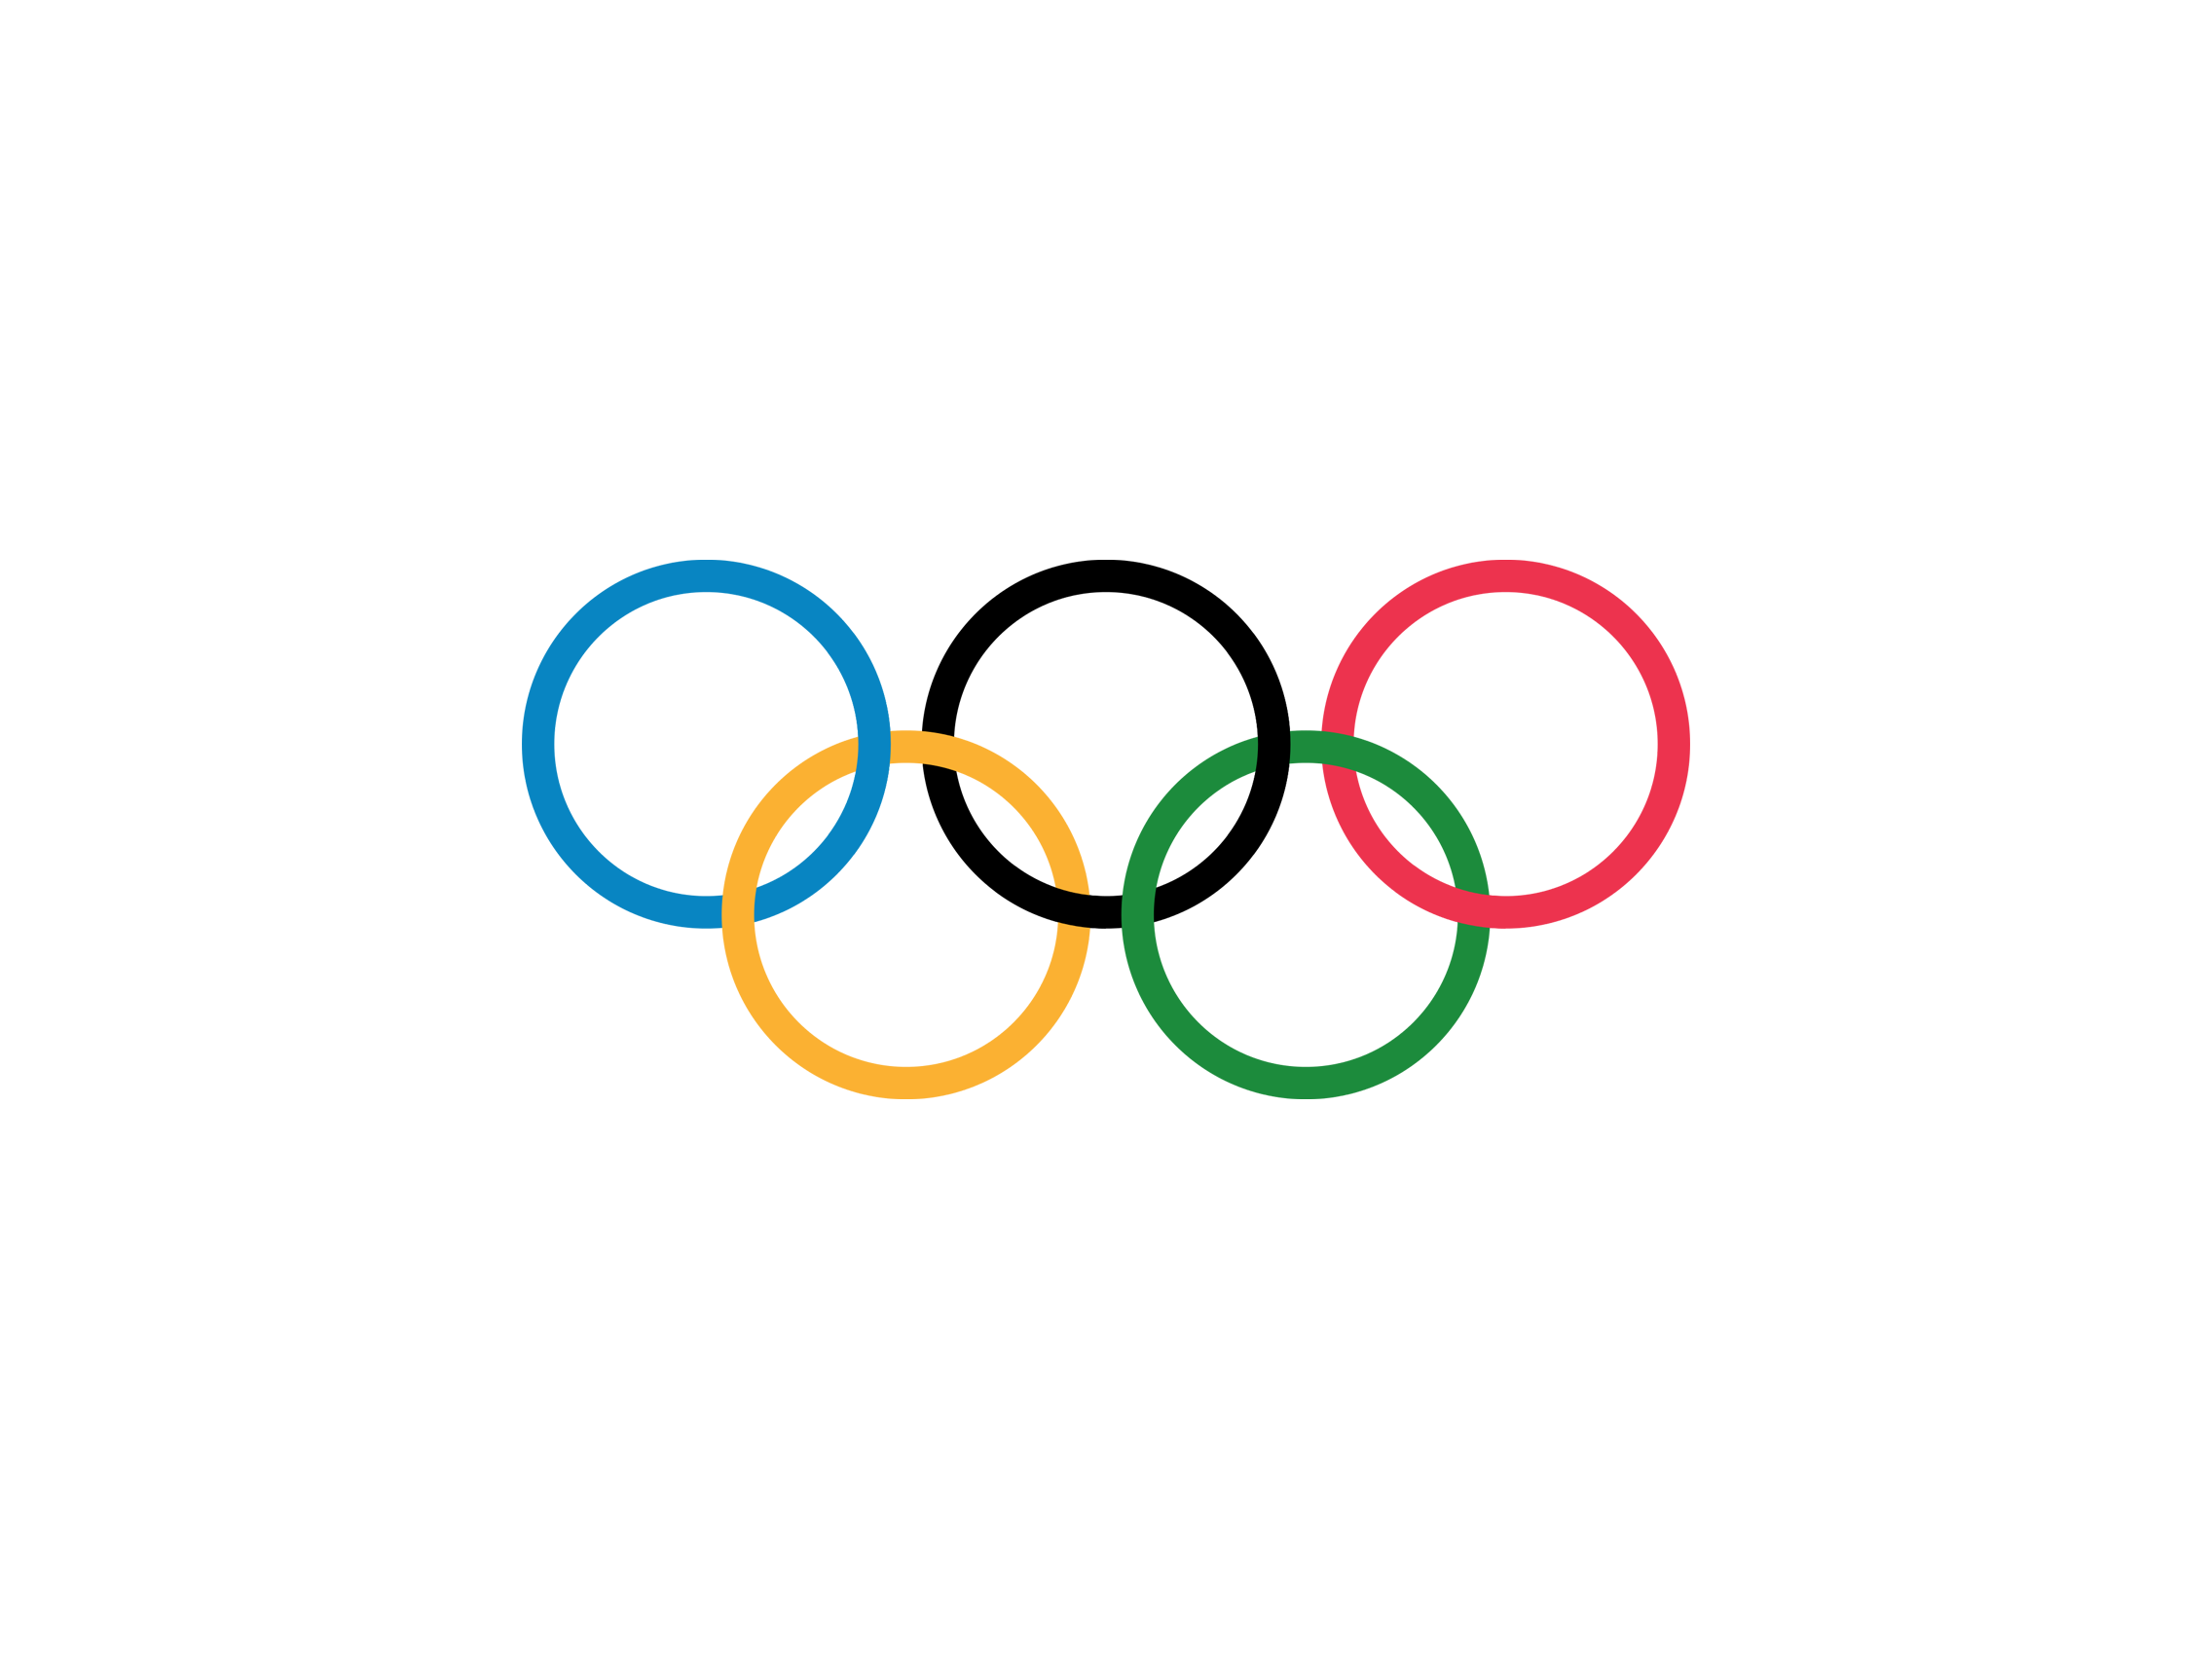 Файл олимпиады. IOC (International Olympic Committee). Международный Олимпийский комитет логотип. Олимпийские кольца. Кольца Олимпийских игр.